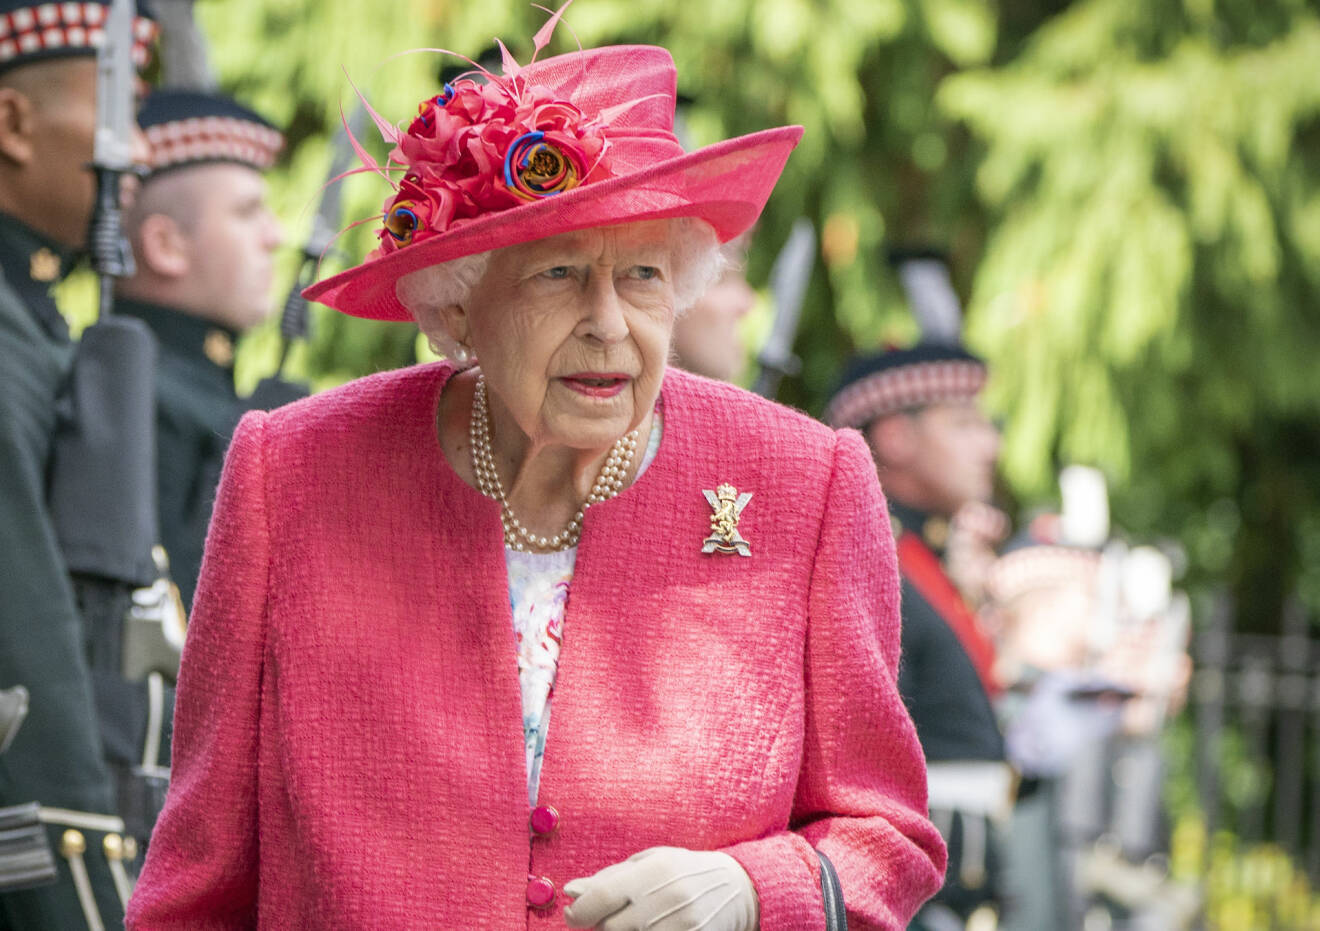 Drottning Elizabeth rosa outfit